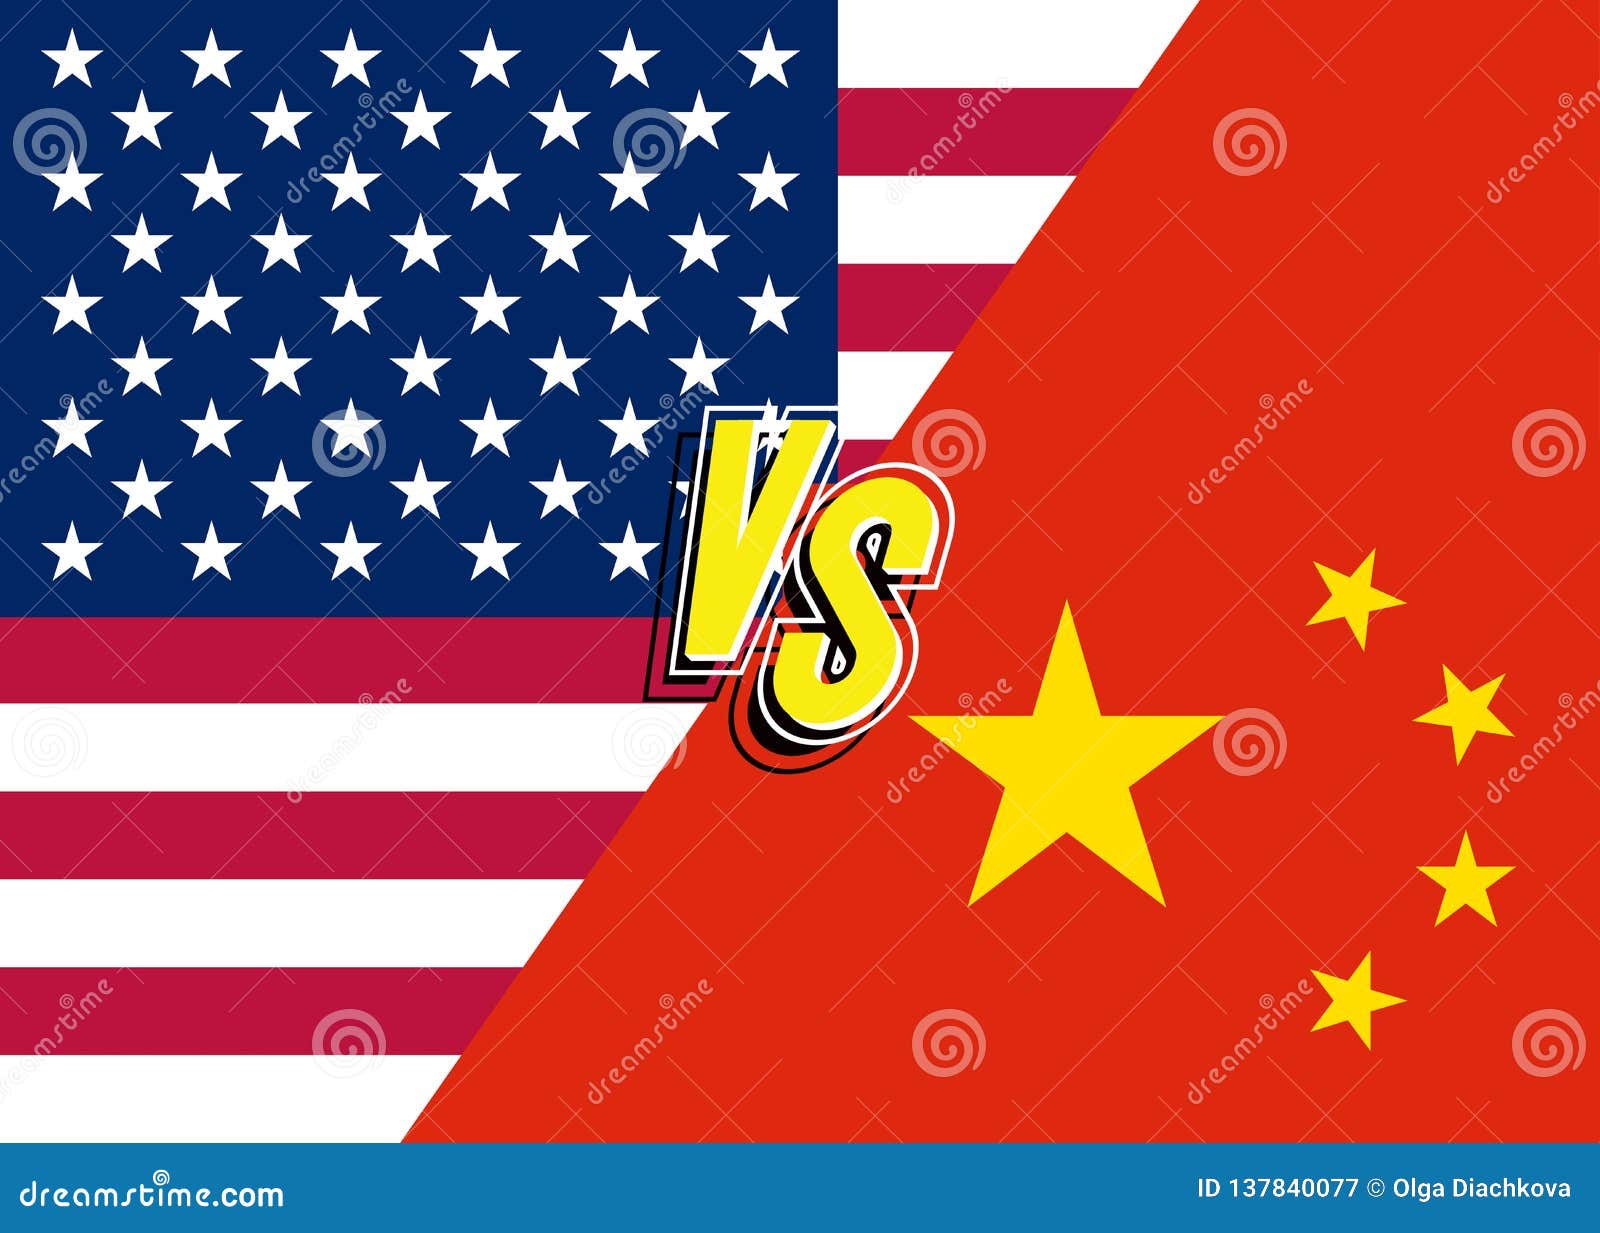 Trade War Concept USA Vs China Stock Vector - Illustration of american